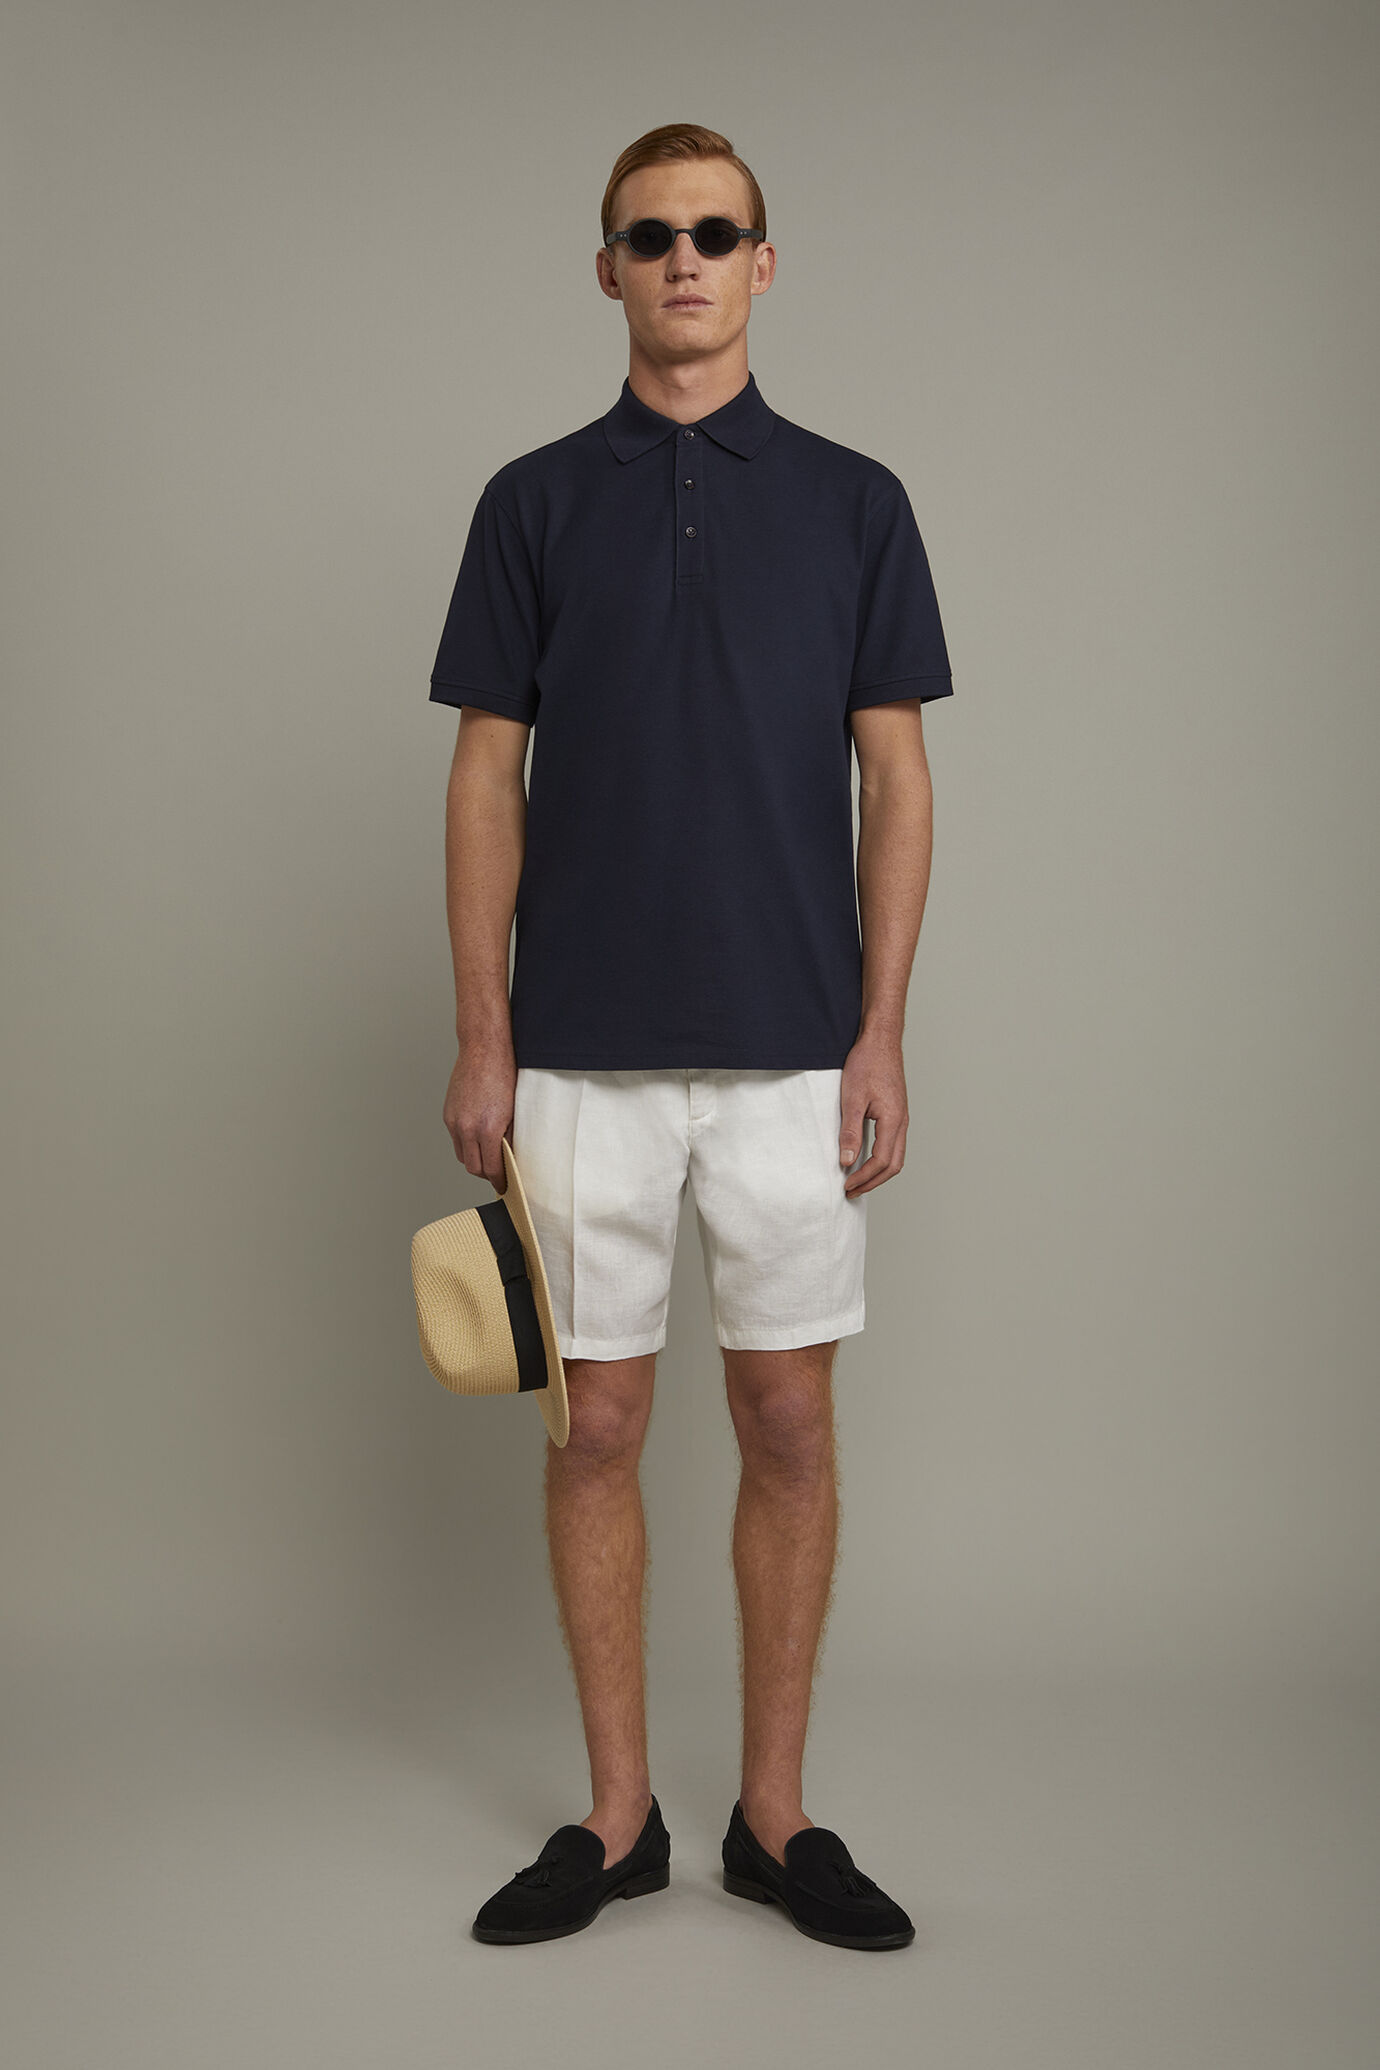 Men’s short sleeve polo shirt 100% piquet cotton regular fit image number 0